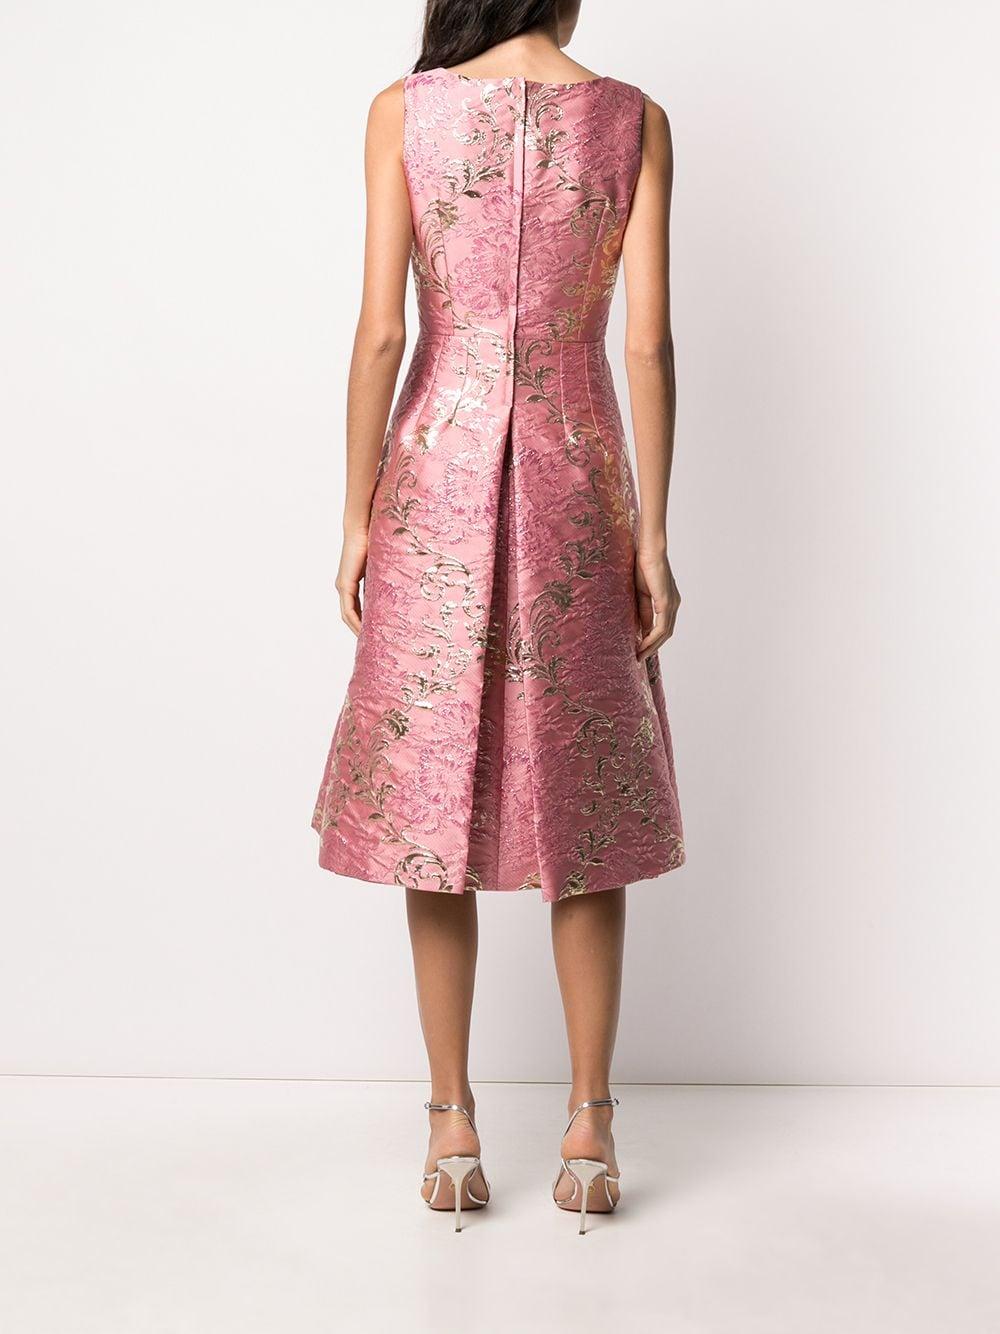 Dolce & Gabbana Jacquard Floral Pattern Dress in Pink | Lyst